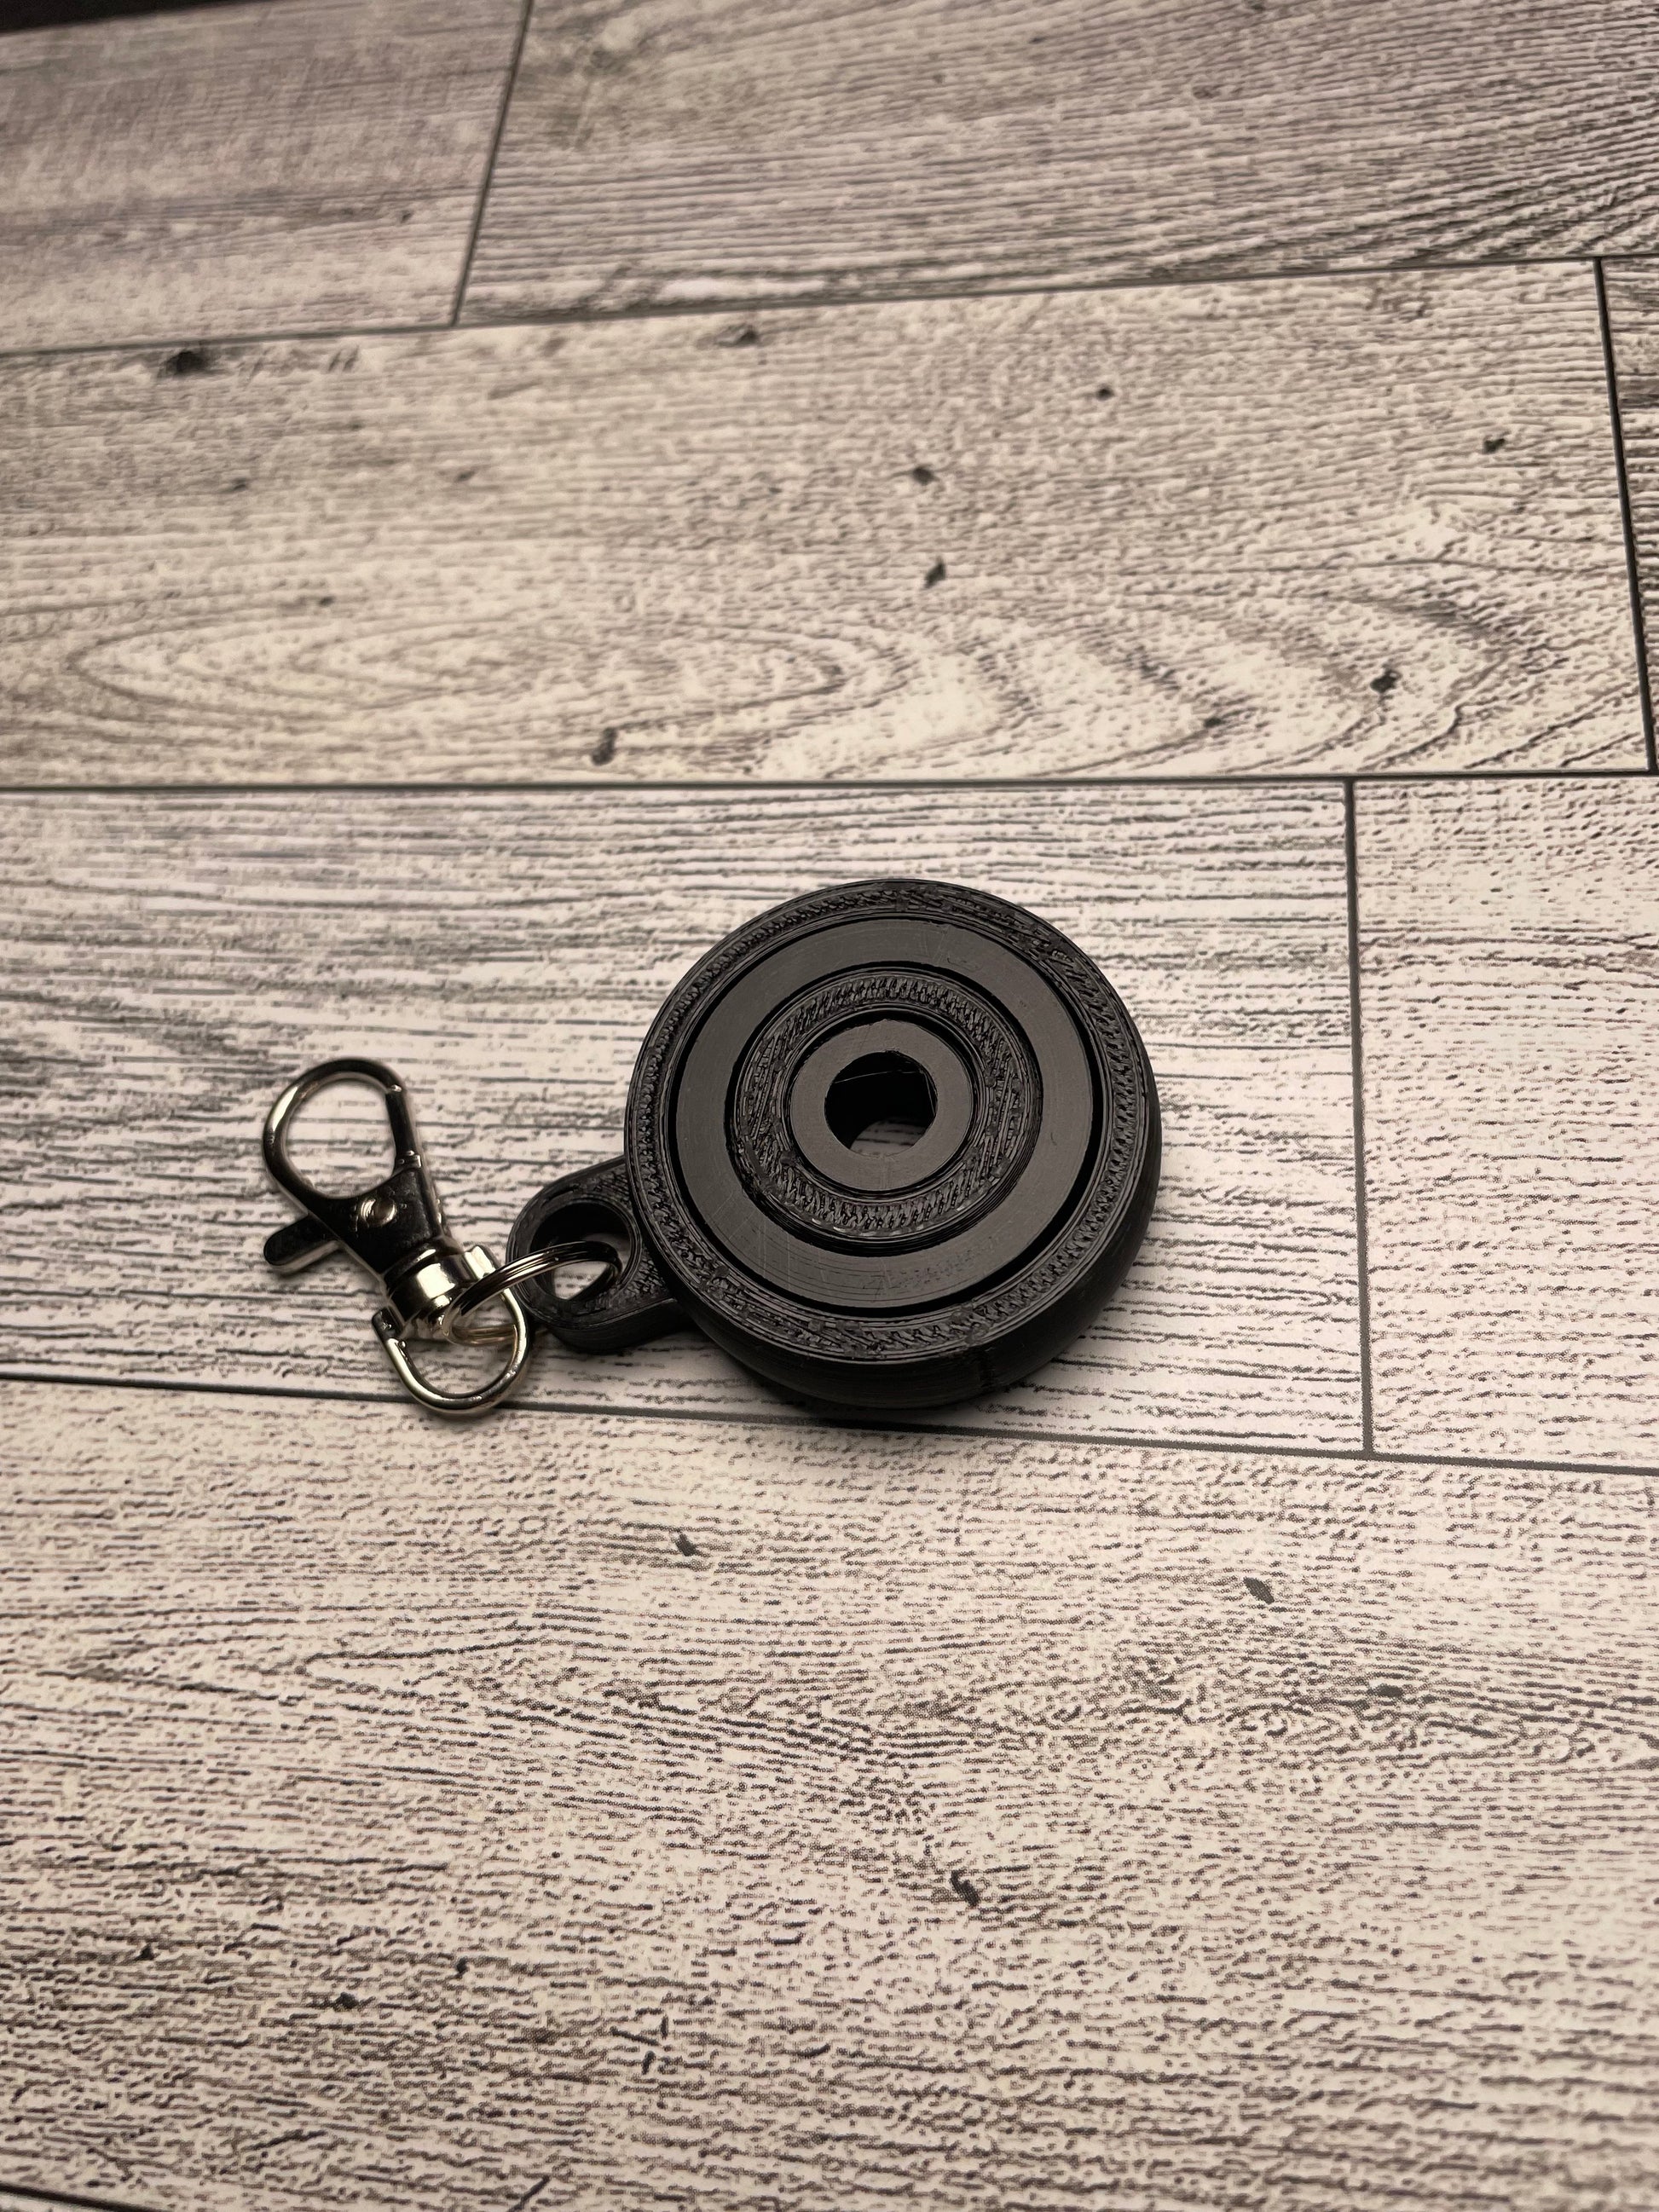 A black gyro fidget with keychain on a light wood grain background.